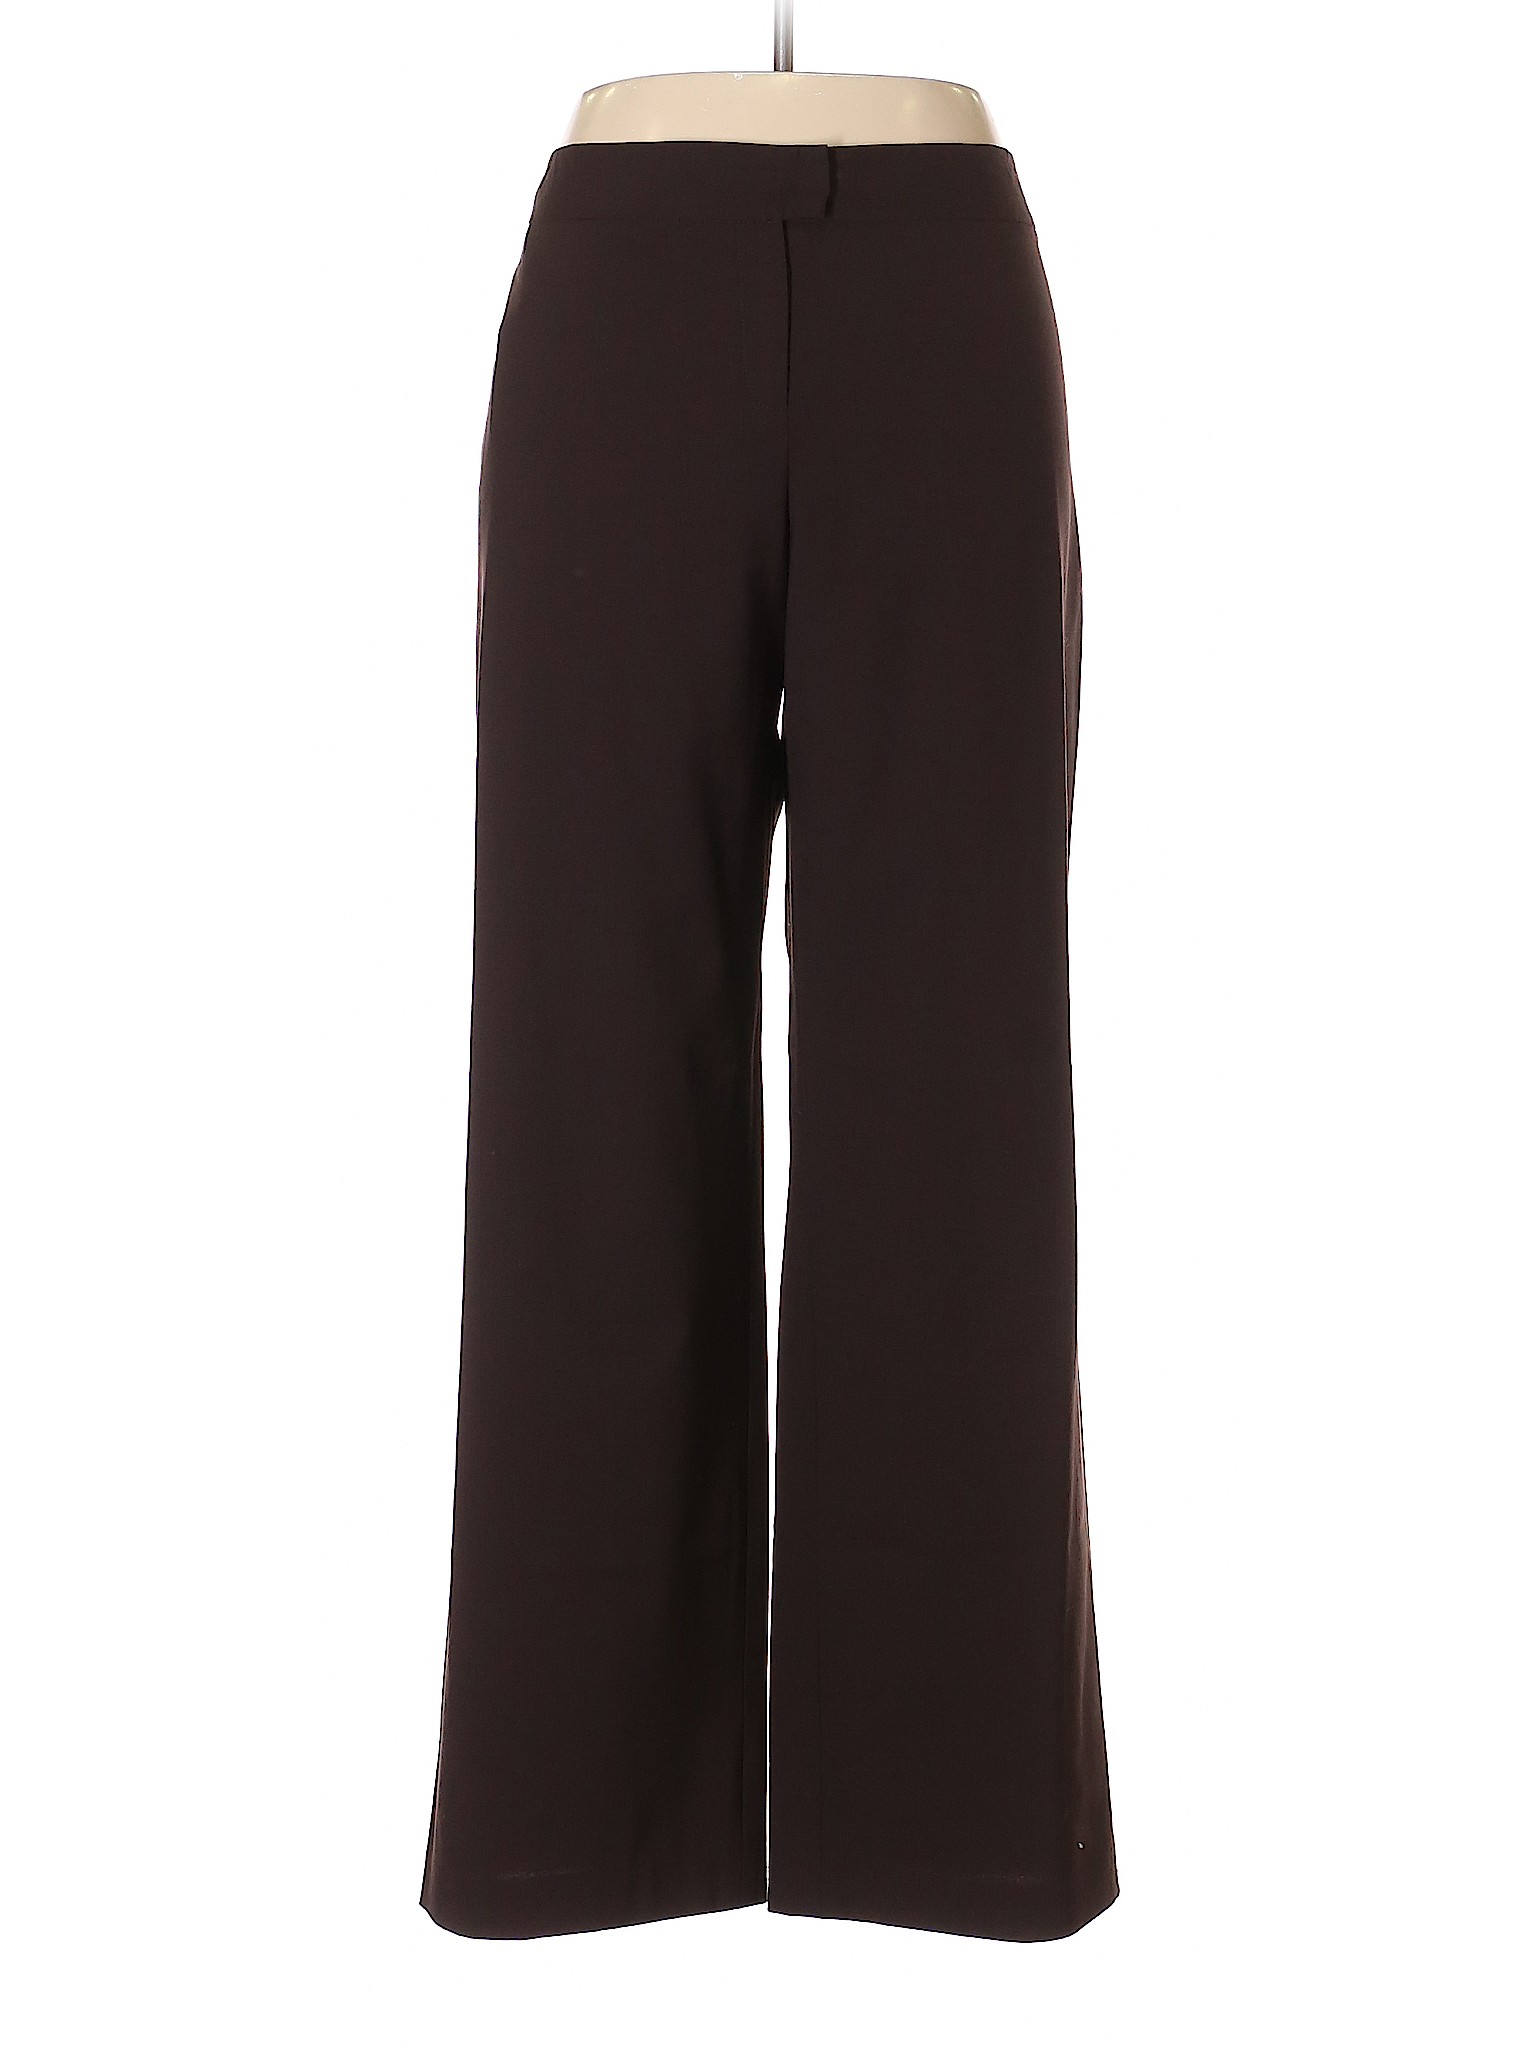 Yeohlee Solid Brown Wool Pants Size 16 - 85% off | thredUP